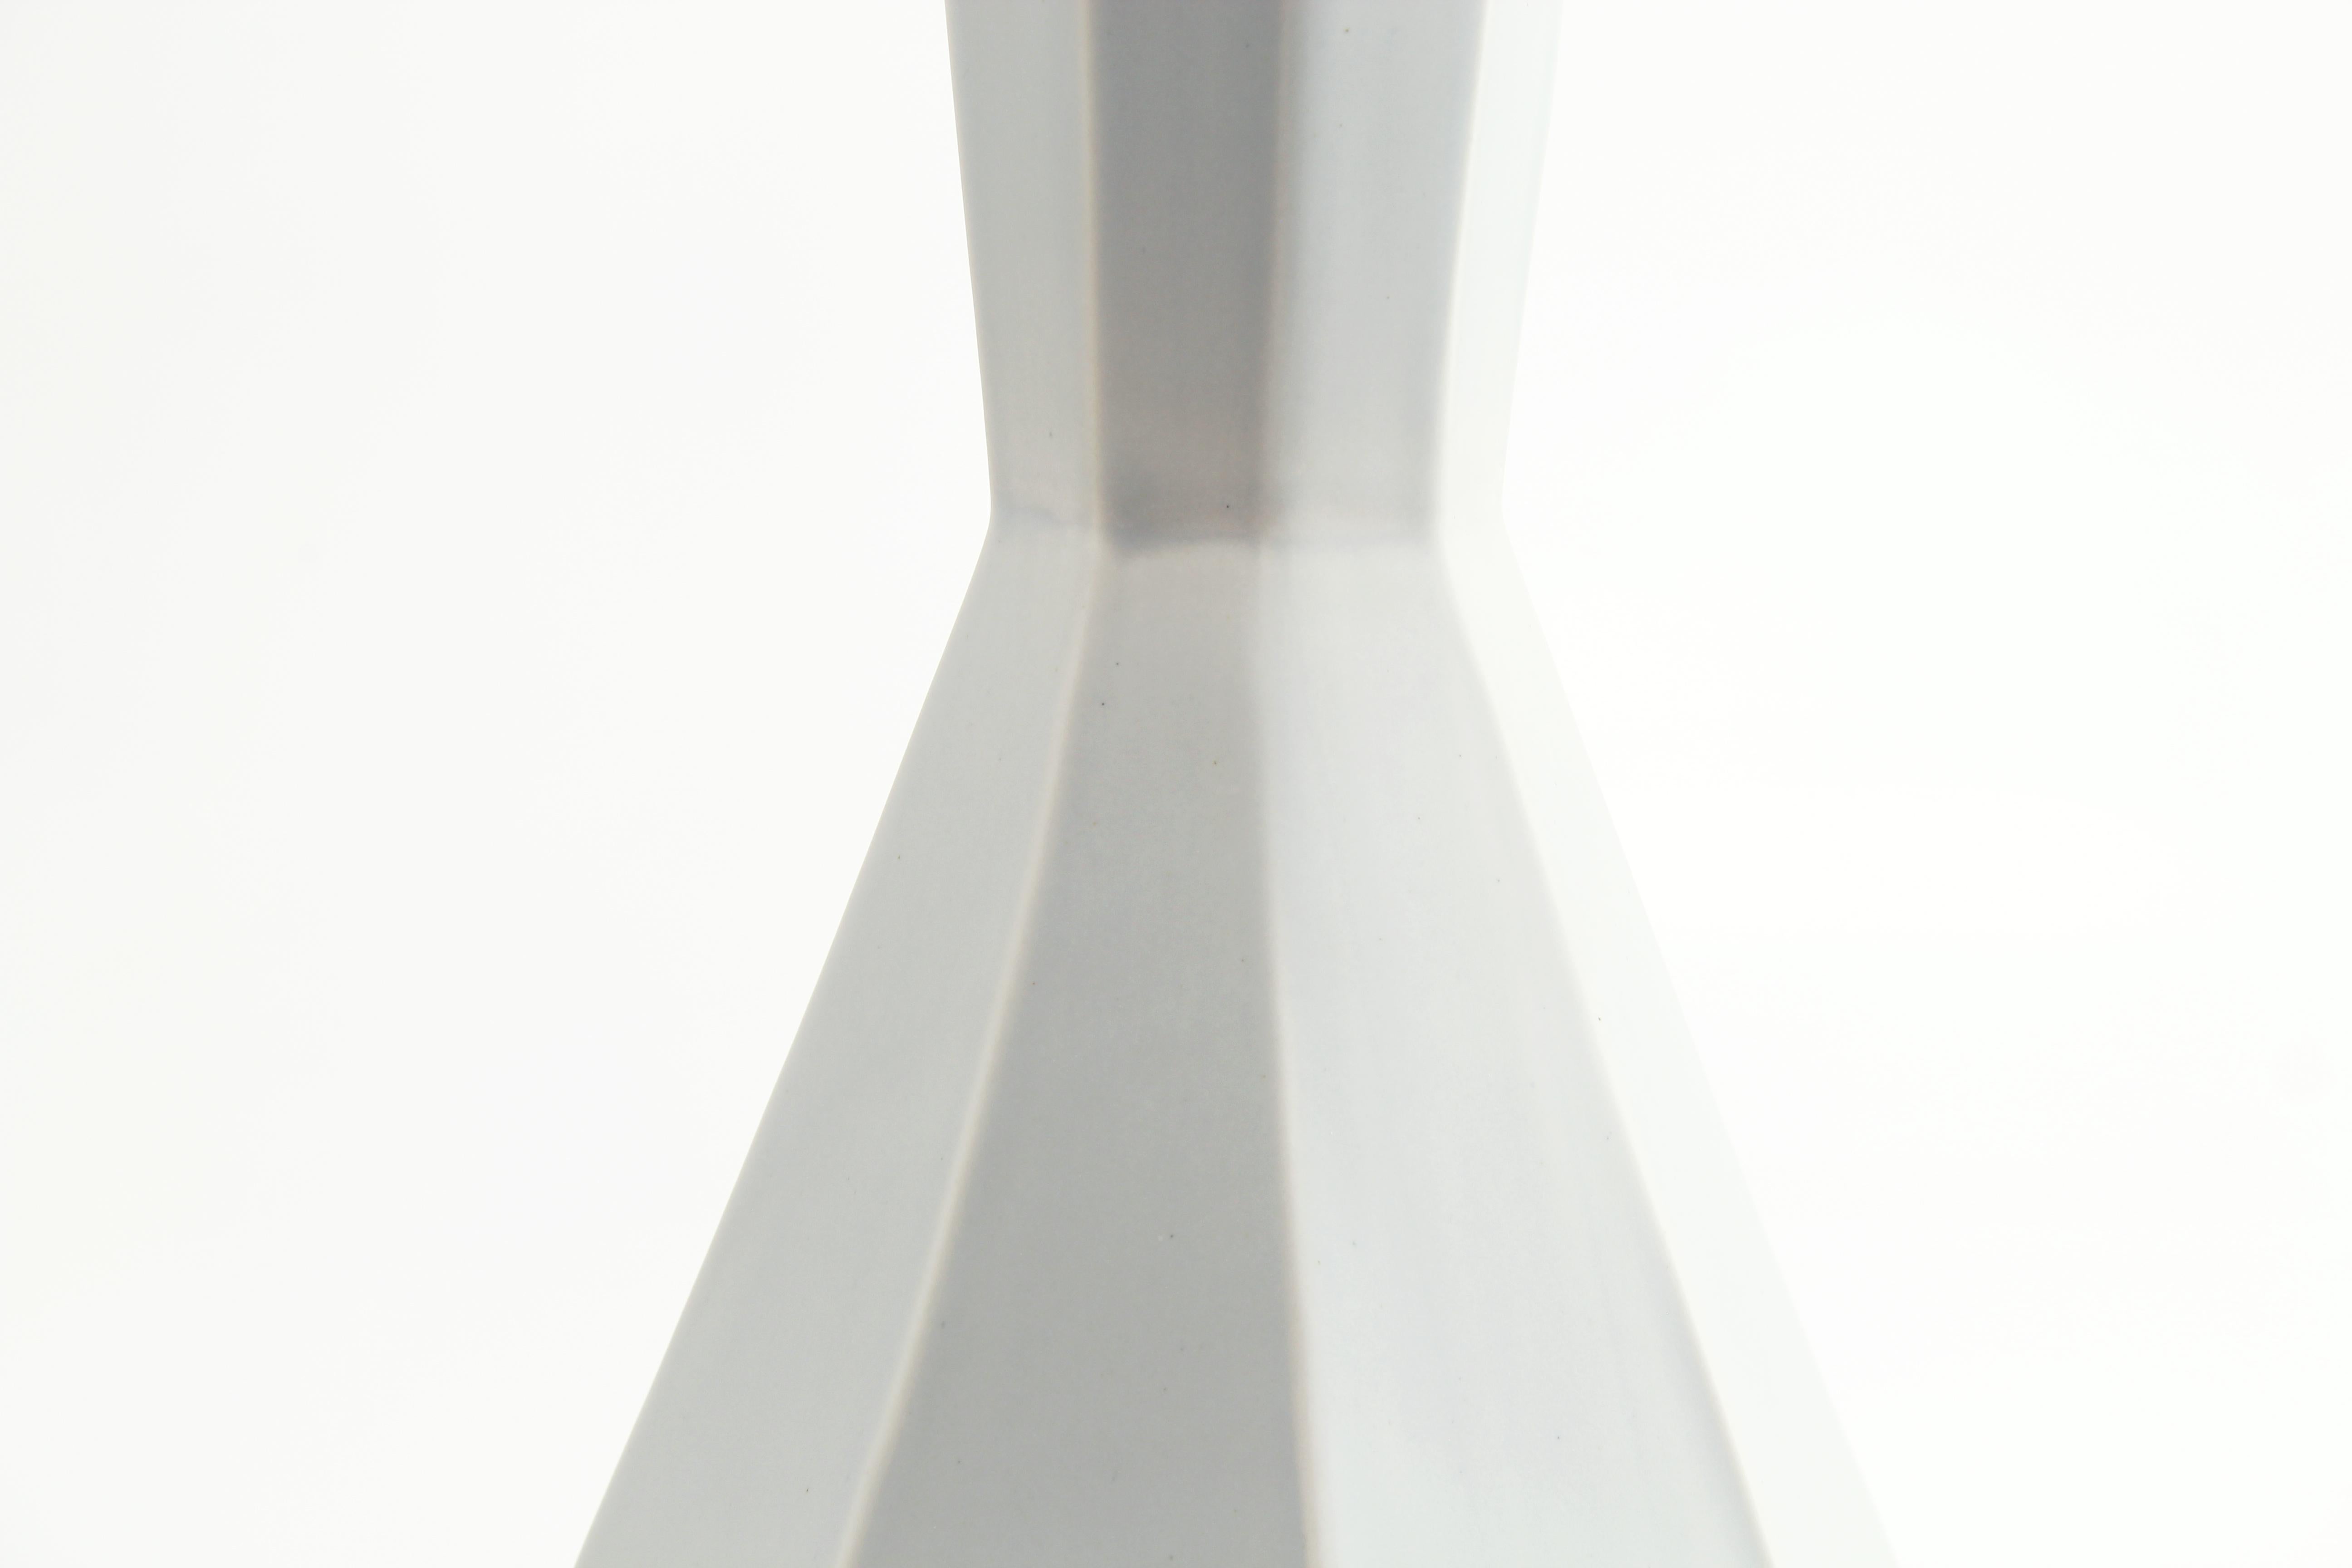 Geometric Statement Vase Smoke Grey Contemporary Porcelain Minimalist (Minimalistisch)